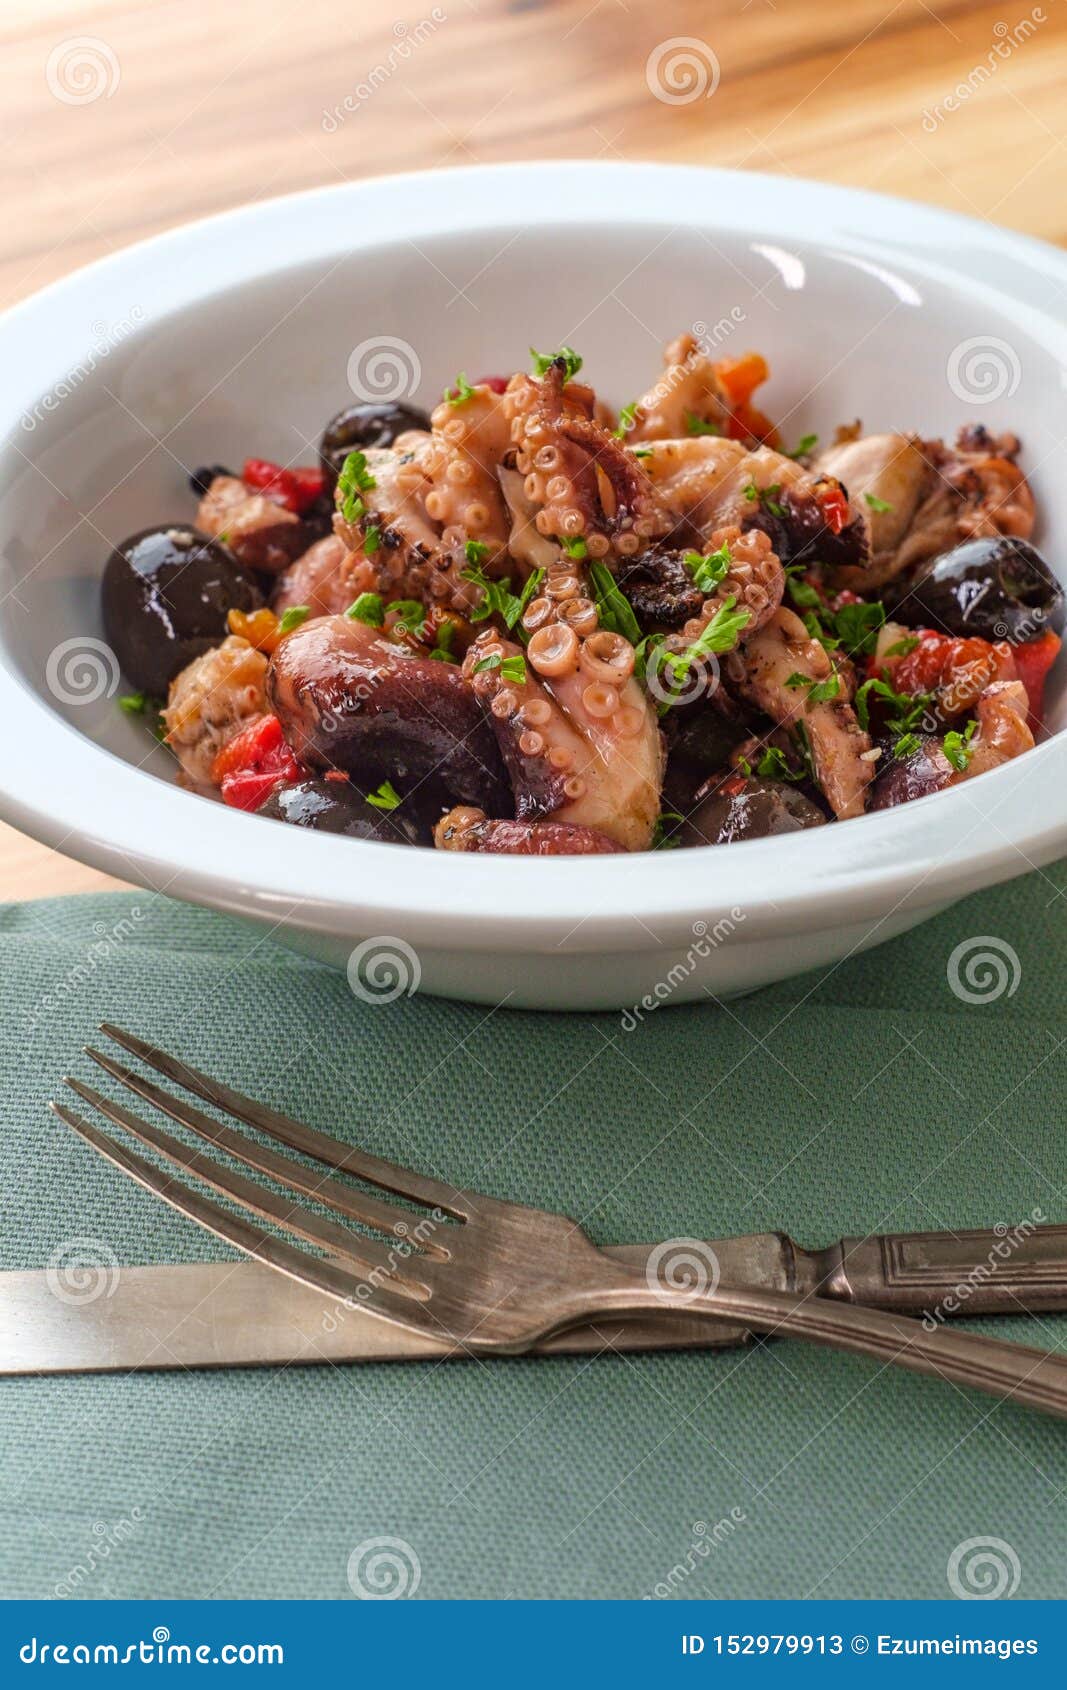 spanish octopus salad